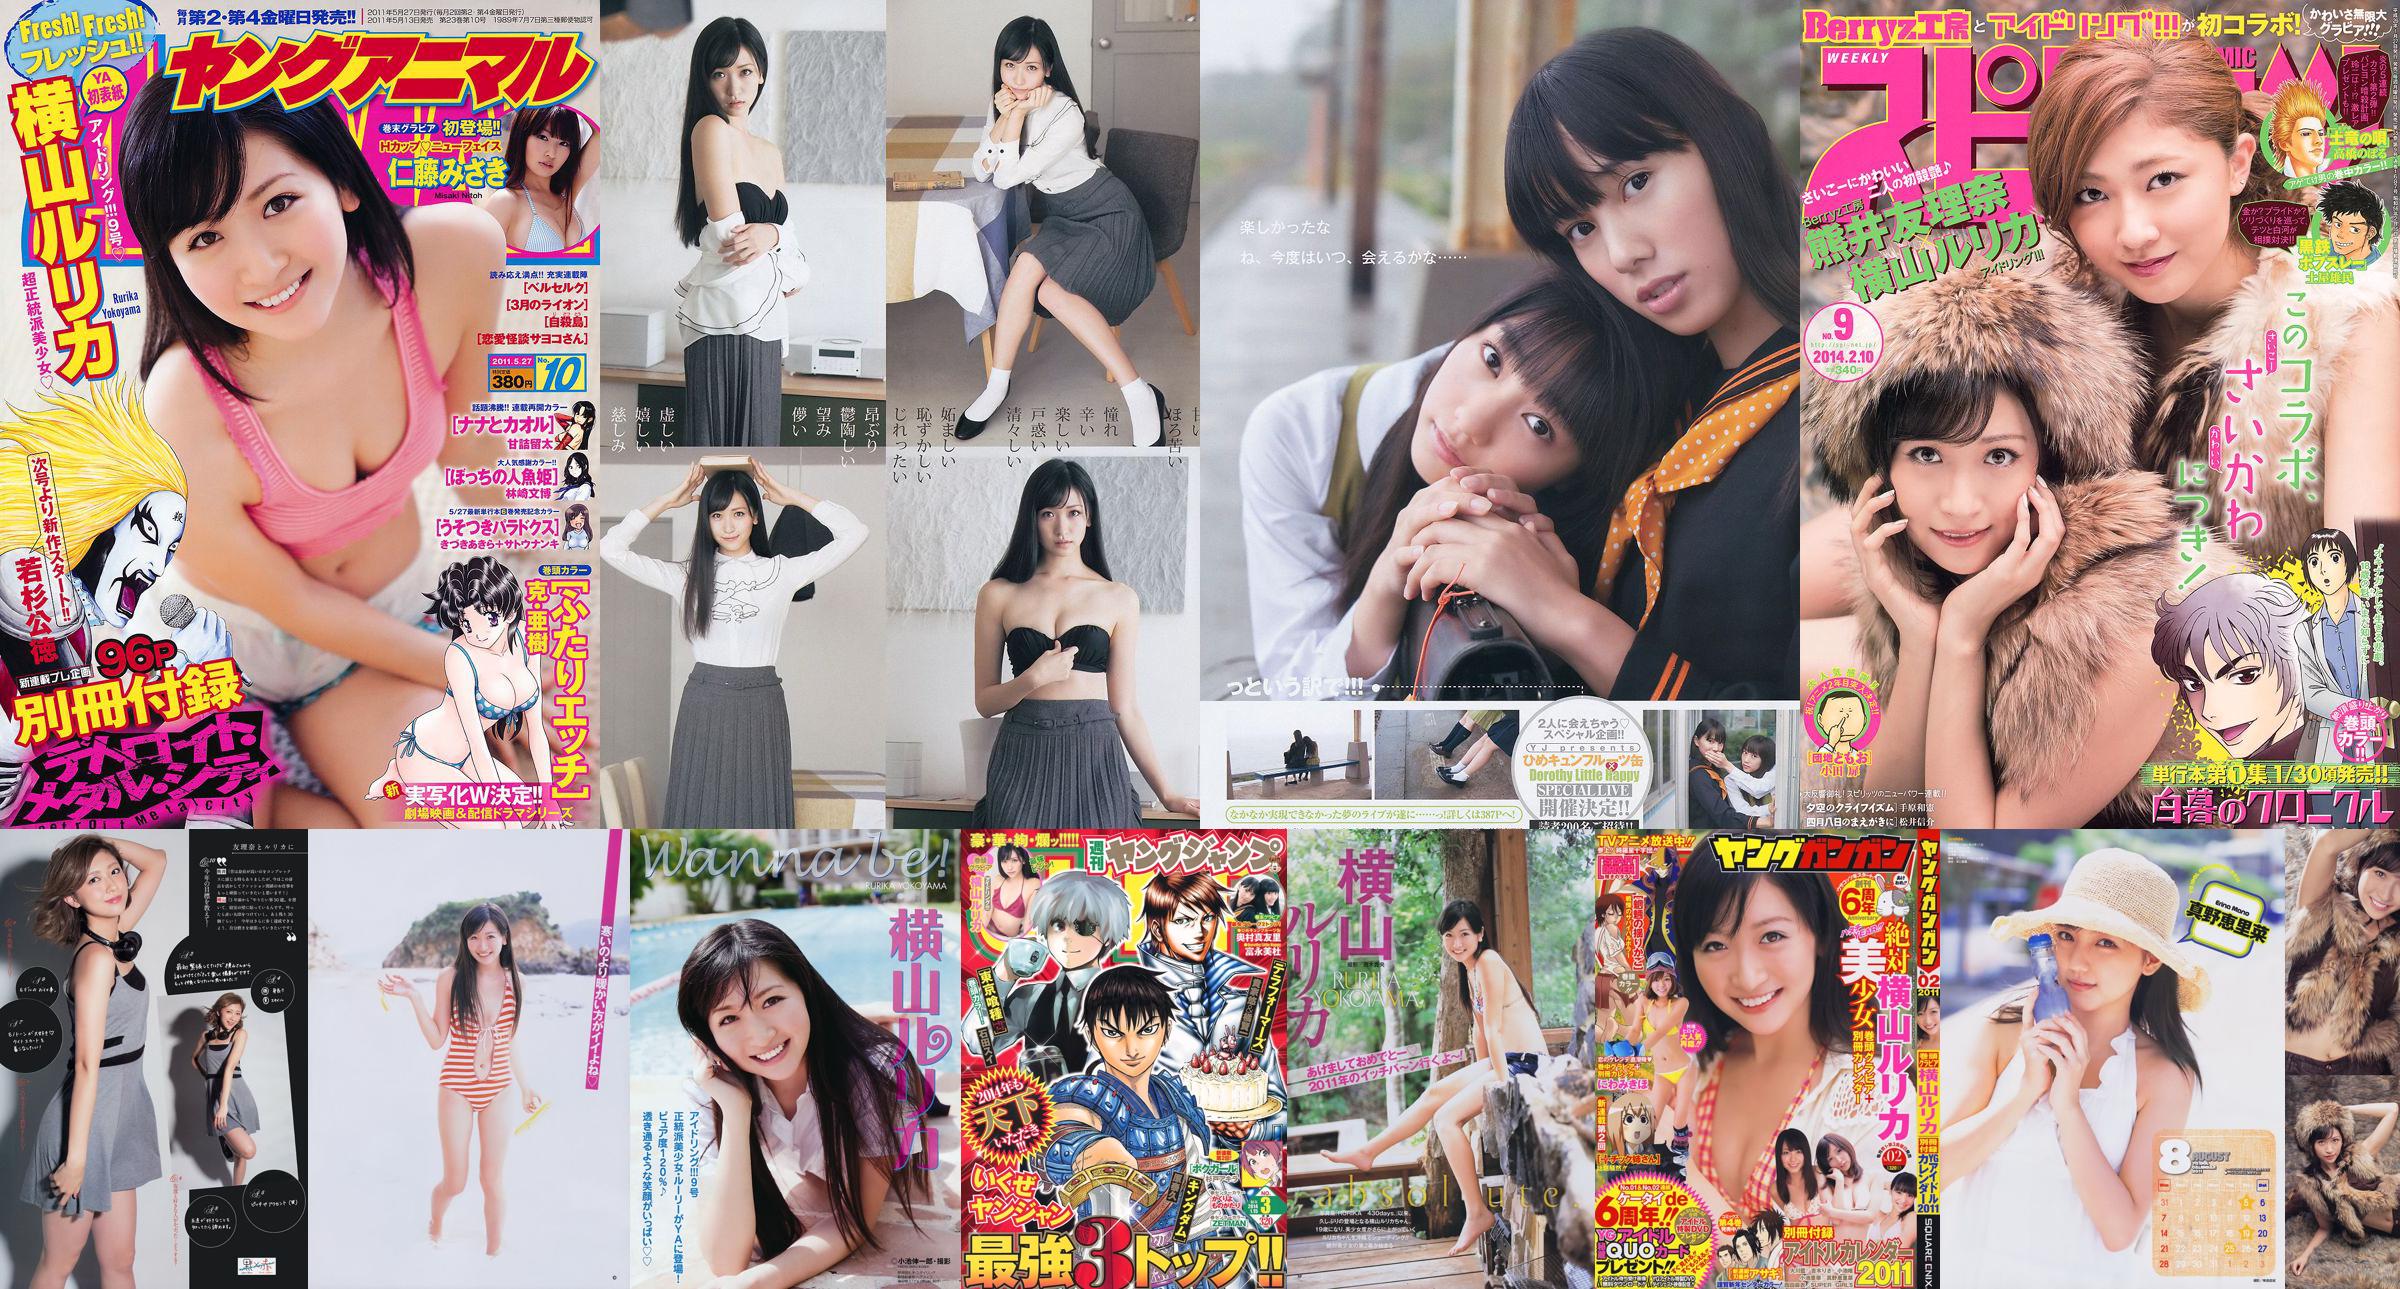 [Grands esprits de la bande dessinée hebdomadaire] Yokoyama Rurika Kumai Yurina 2014 Magazine photo n ° 09 No.4c9283 Page 1